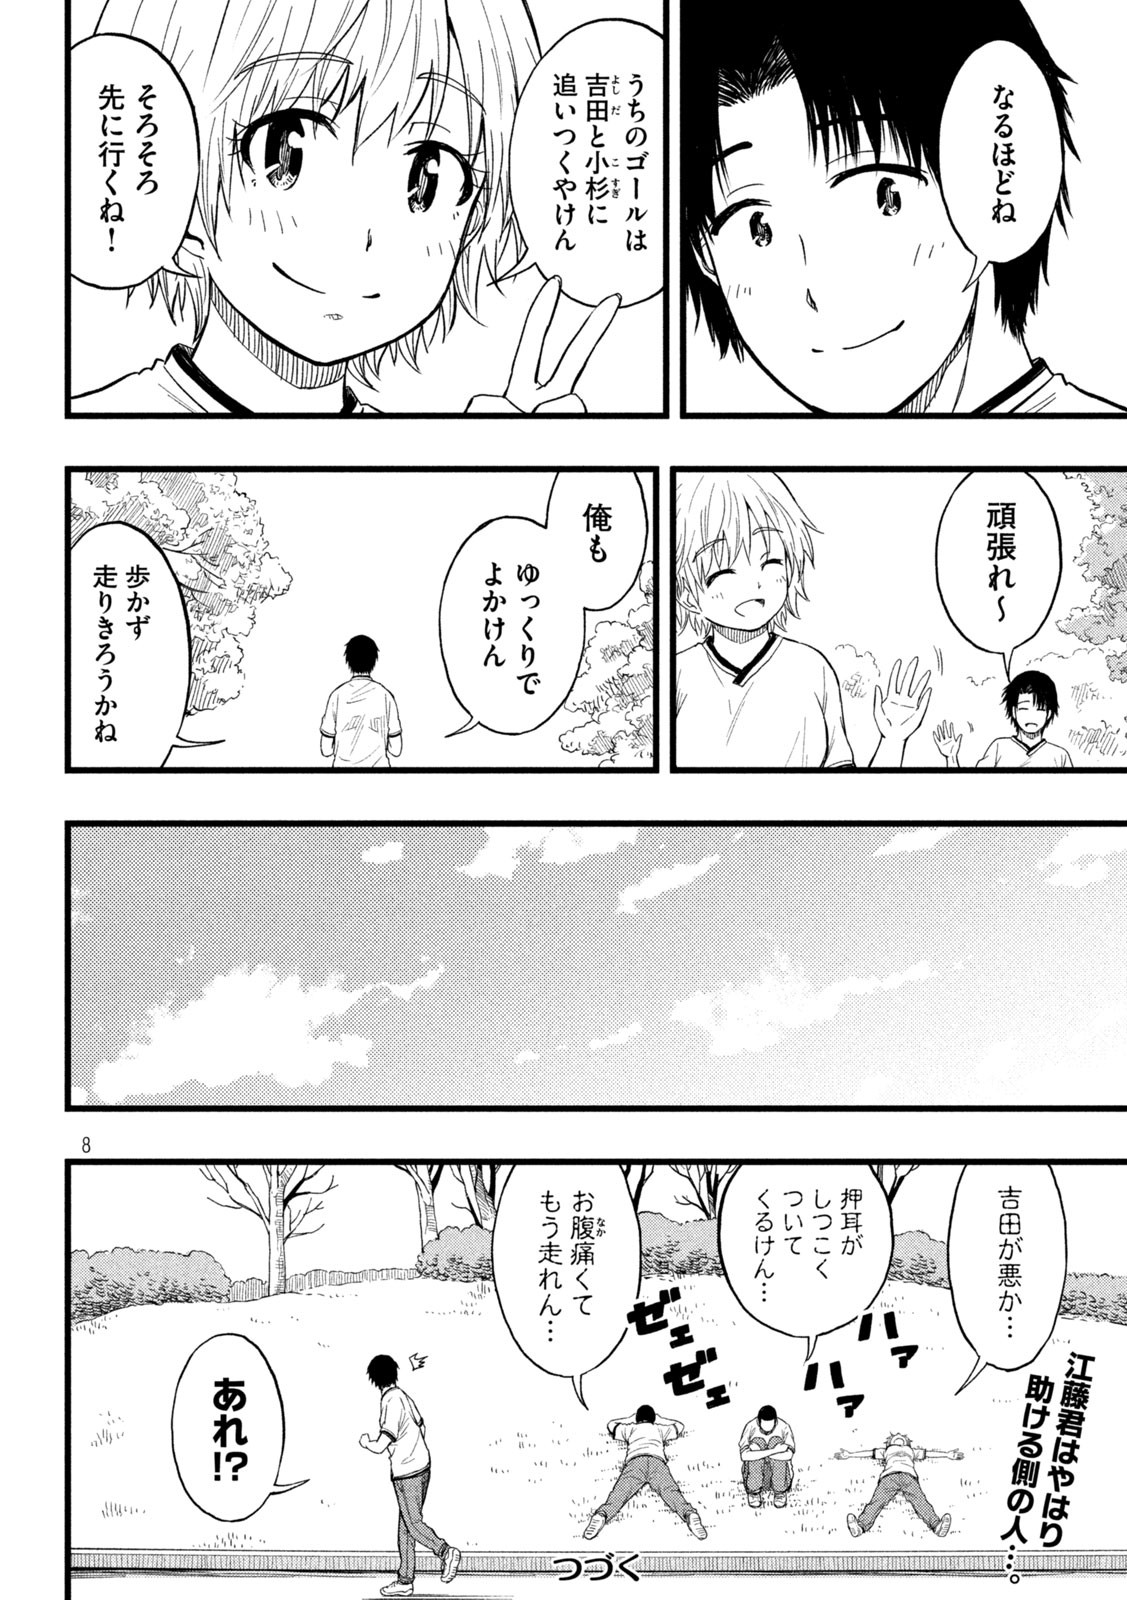 Koharu haru! - Chapter 86 - Page 4